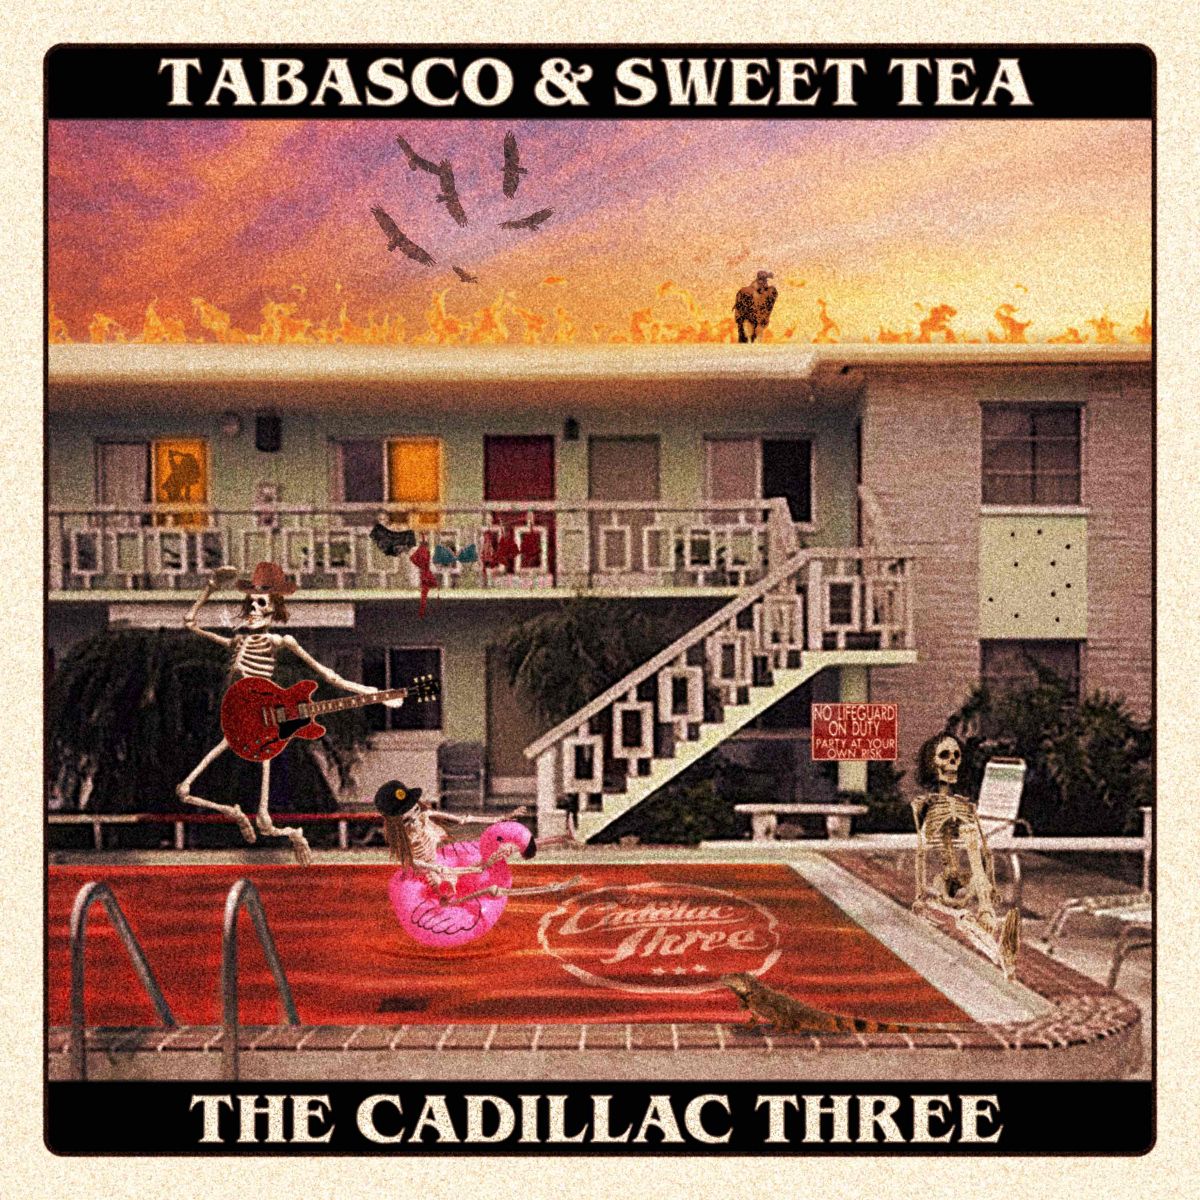 The Cadillac Three release their brand new album 'Tabasco & Sweet Tea'